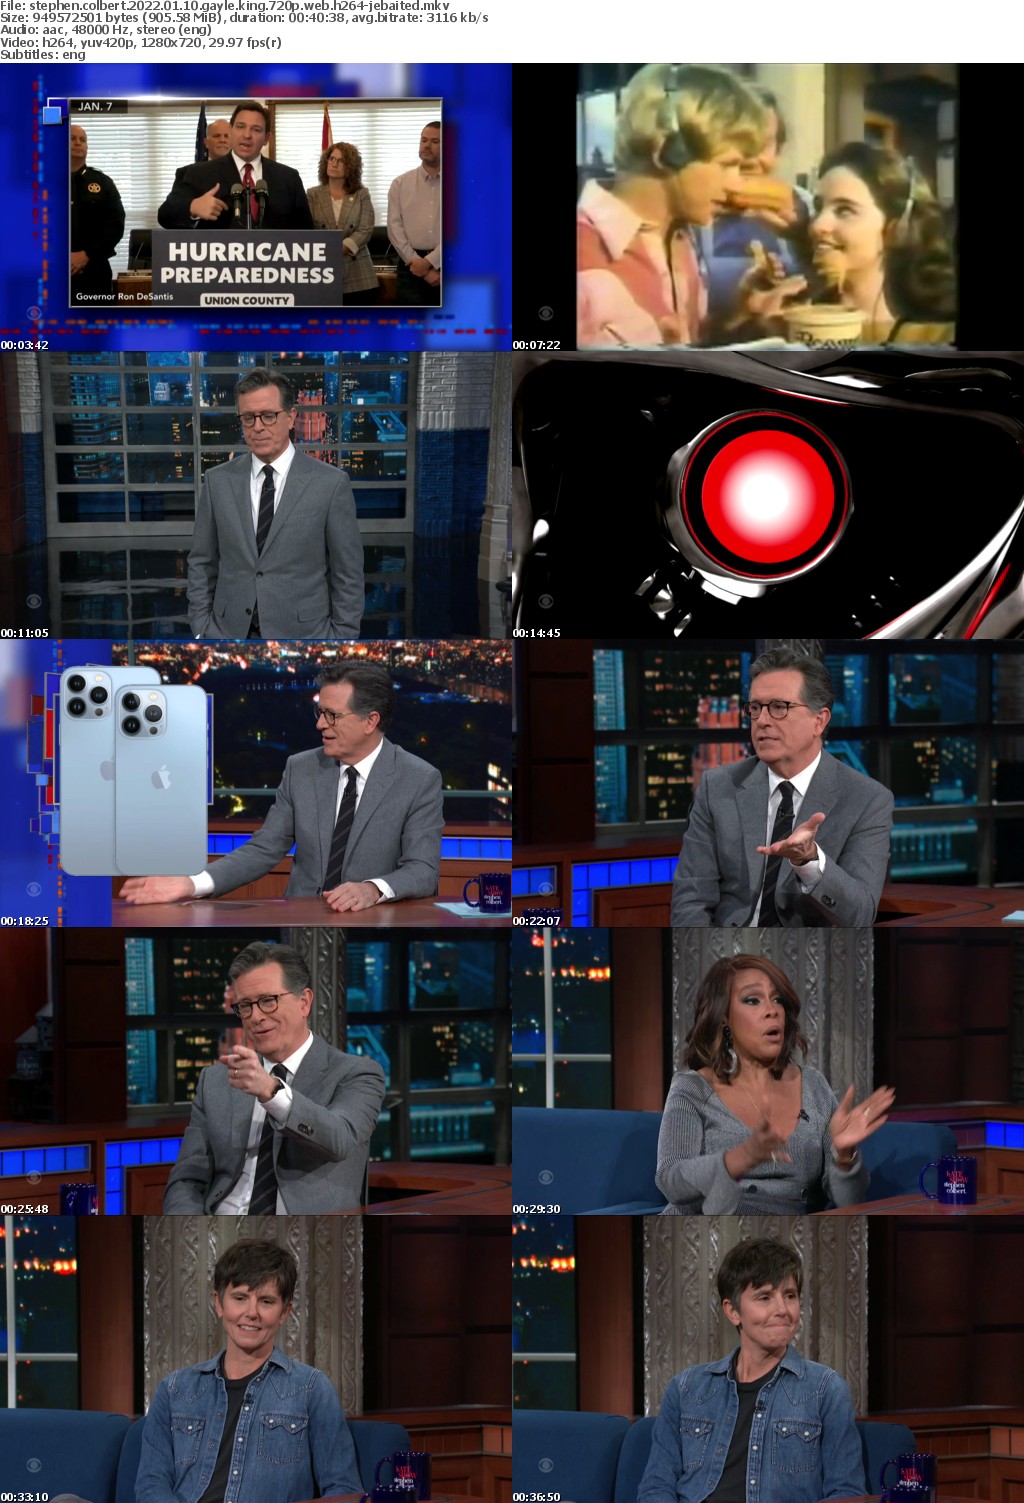 Stephen Colbert 2022 01 10 Gayle King 720p WEB H264-JEBAITED